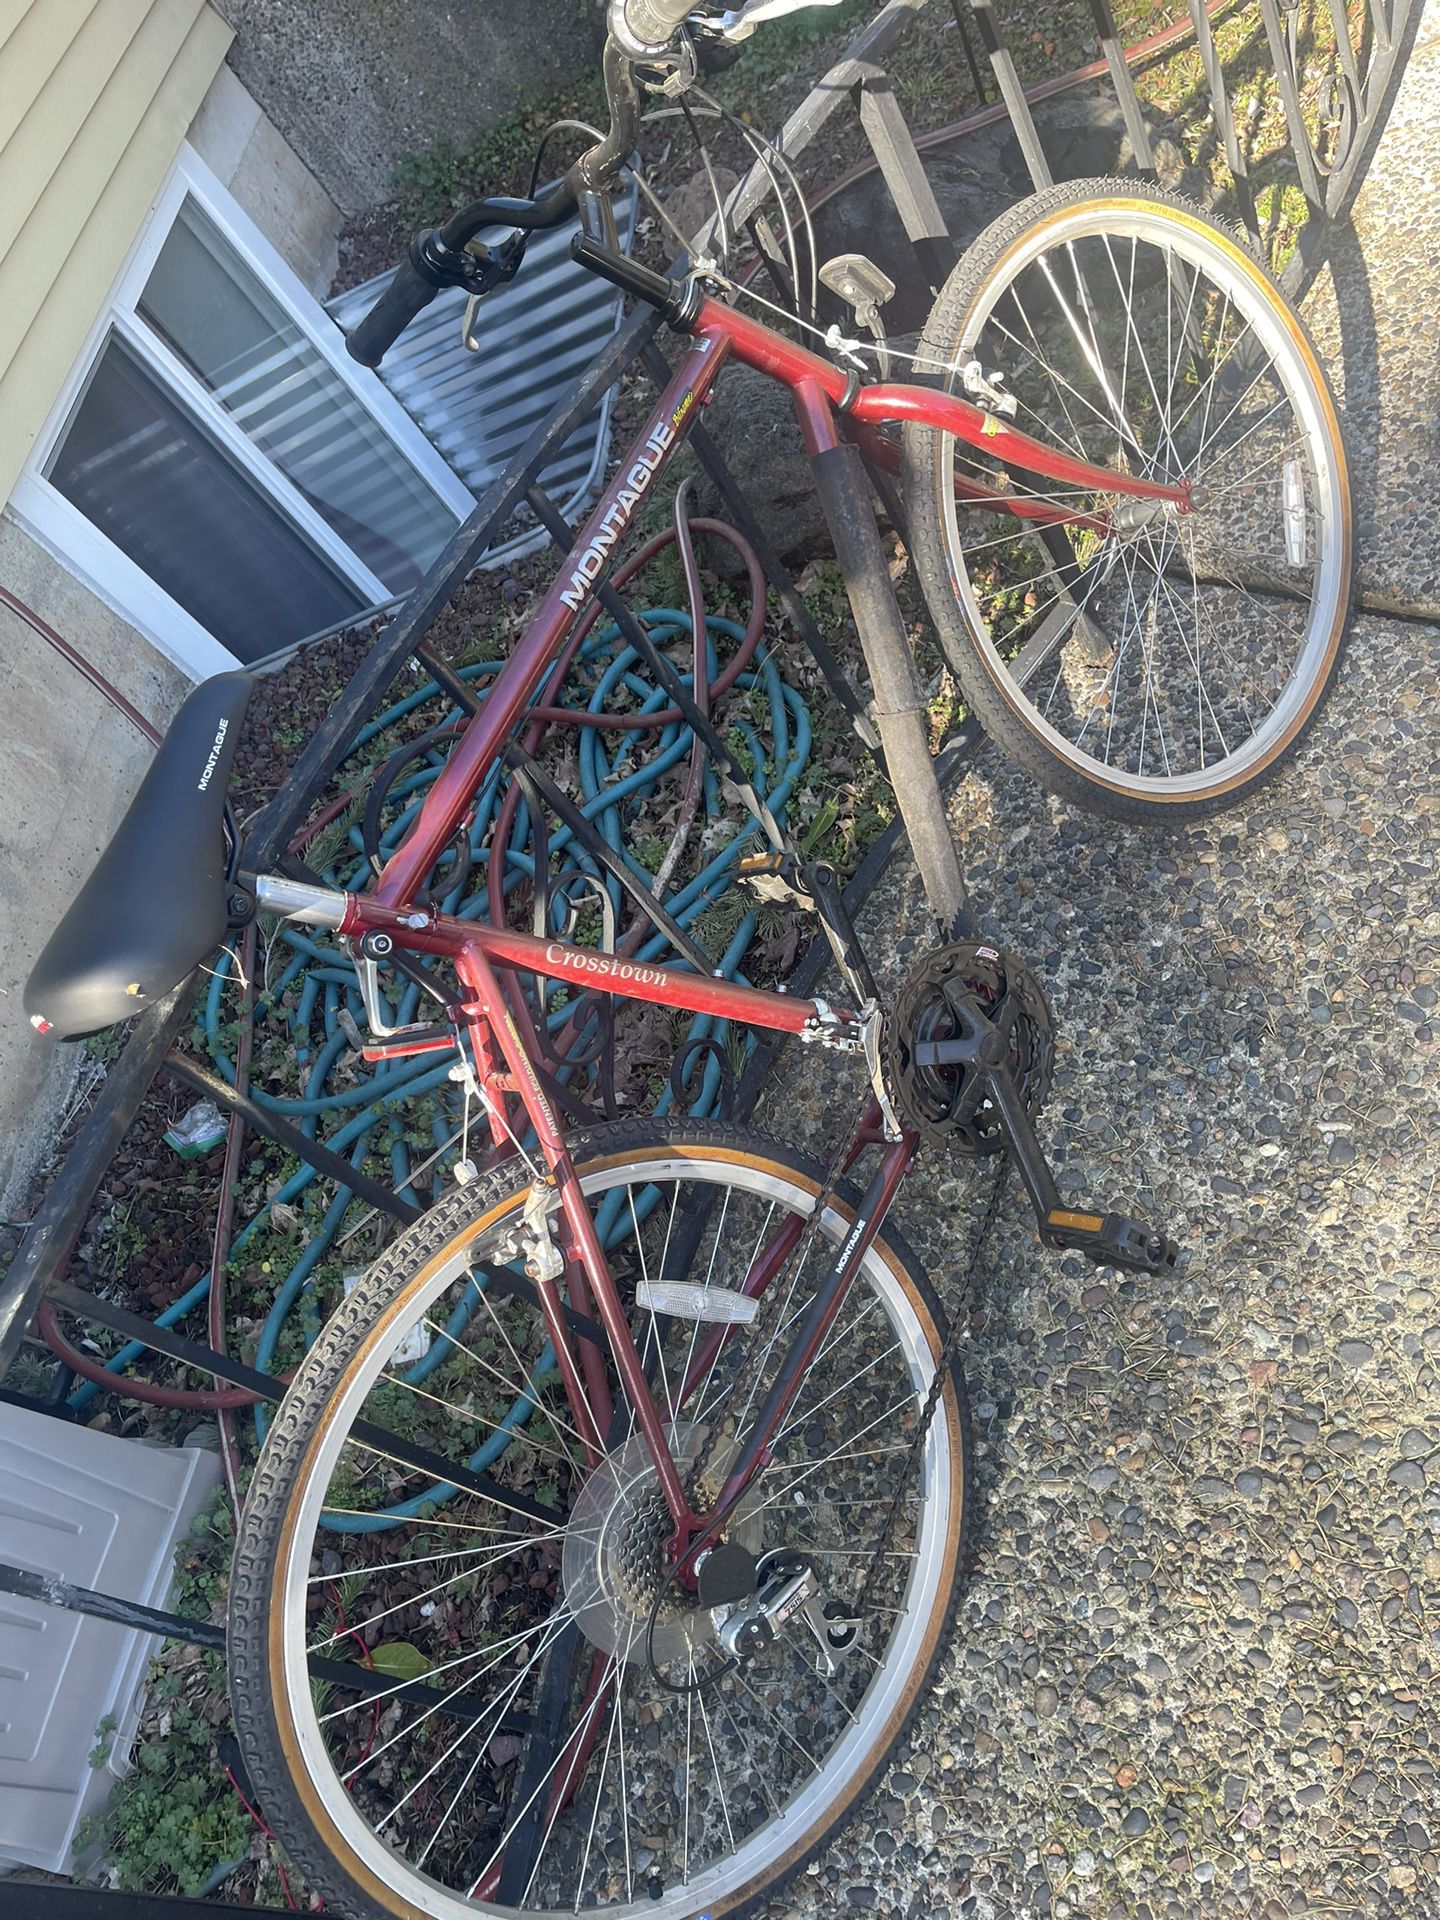 monatague crosstown bi frame vintage folding bike 26”